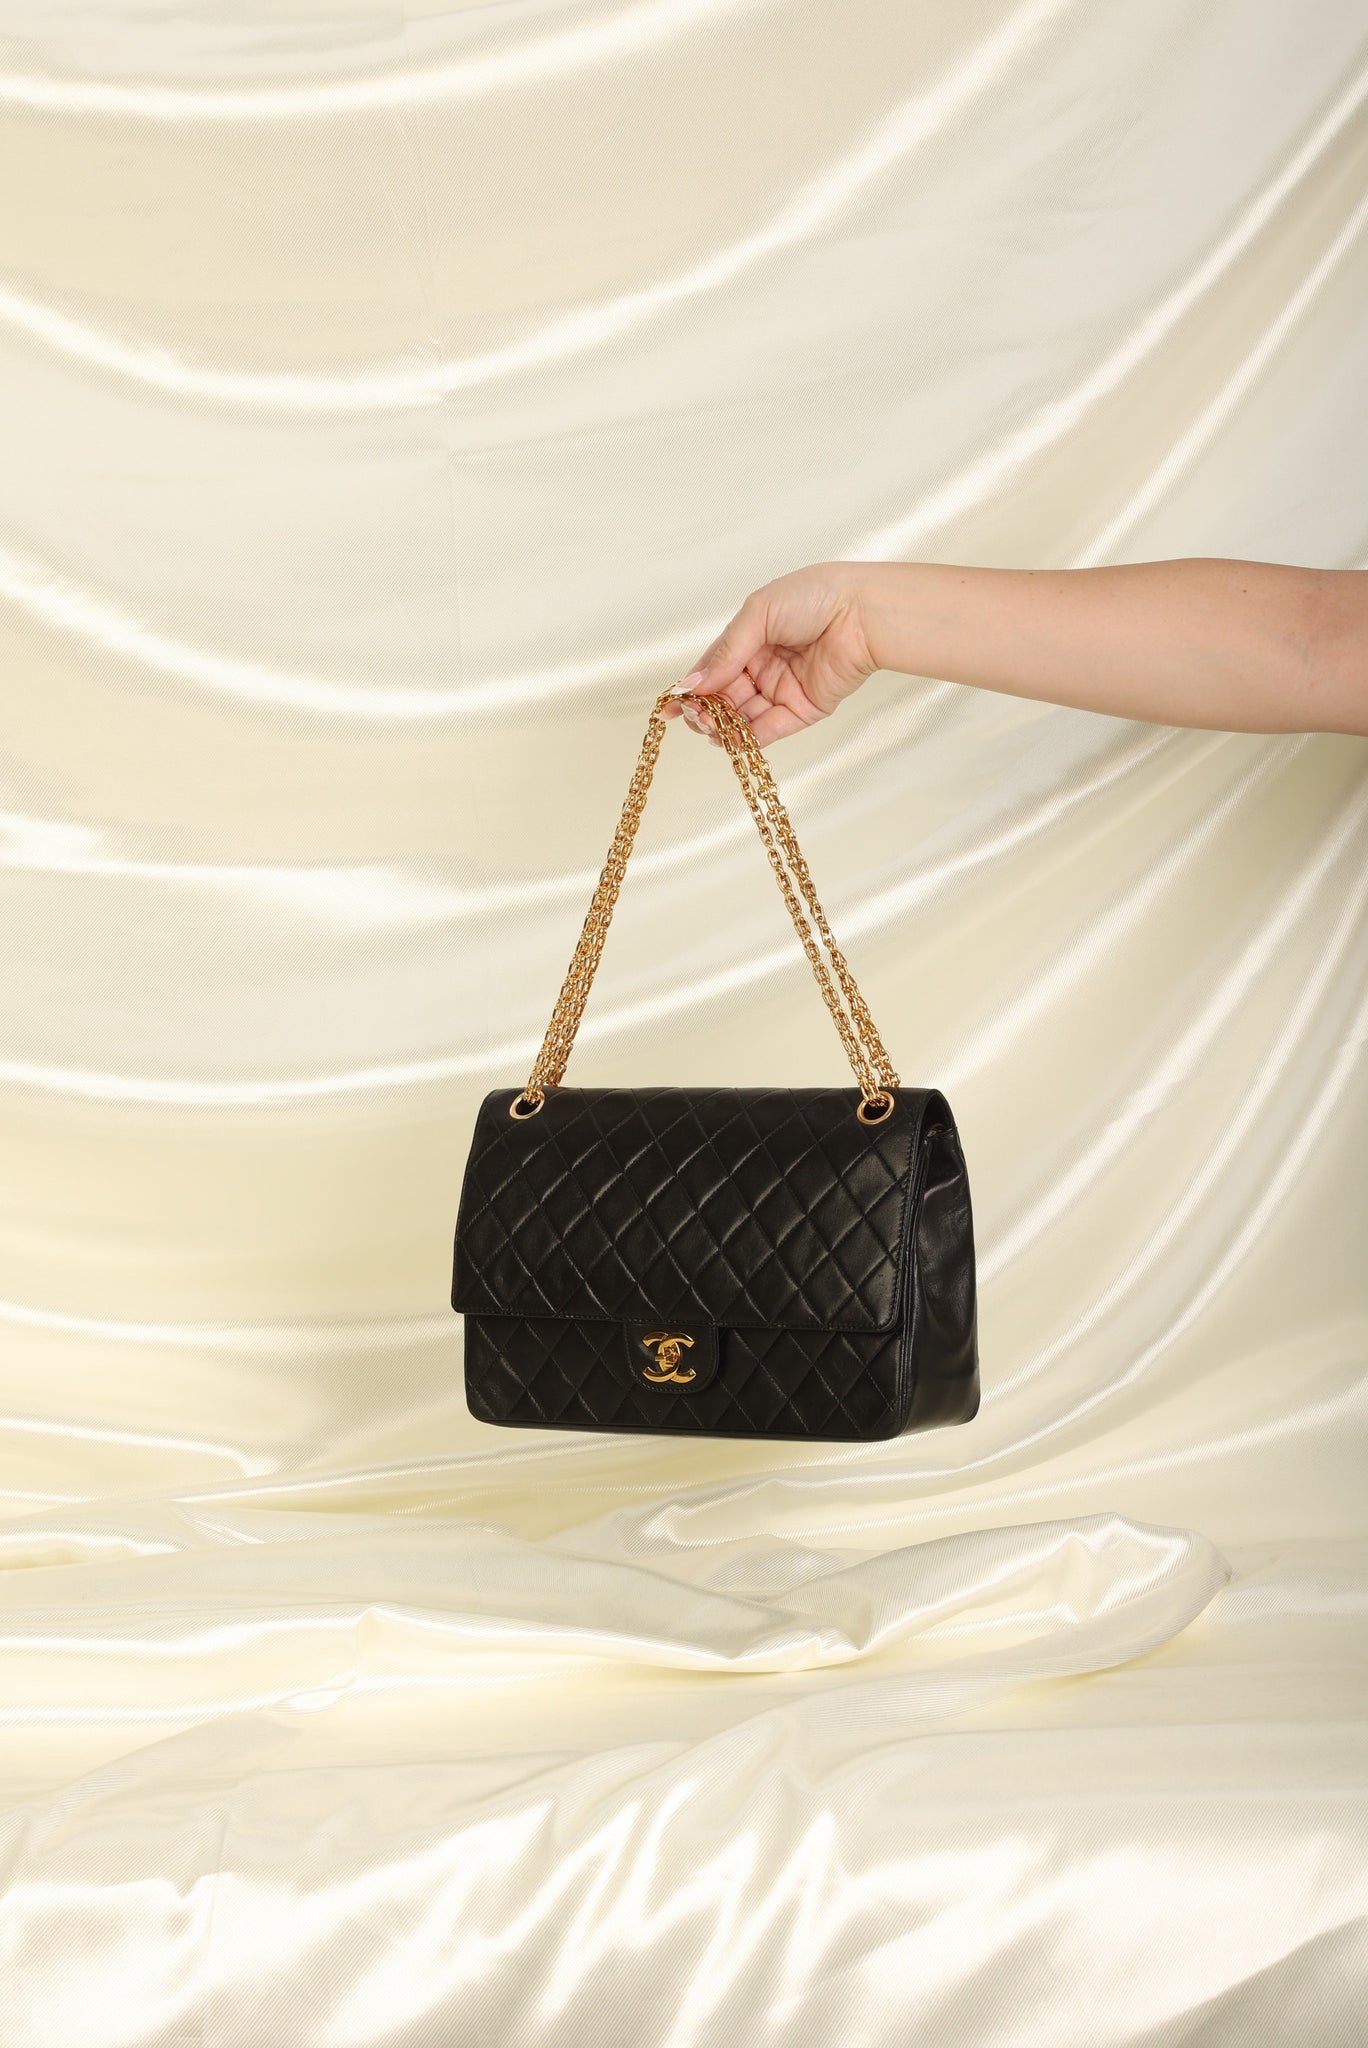 Handbags Chanel Chanel Shoulder Bag Trendy Reissue